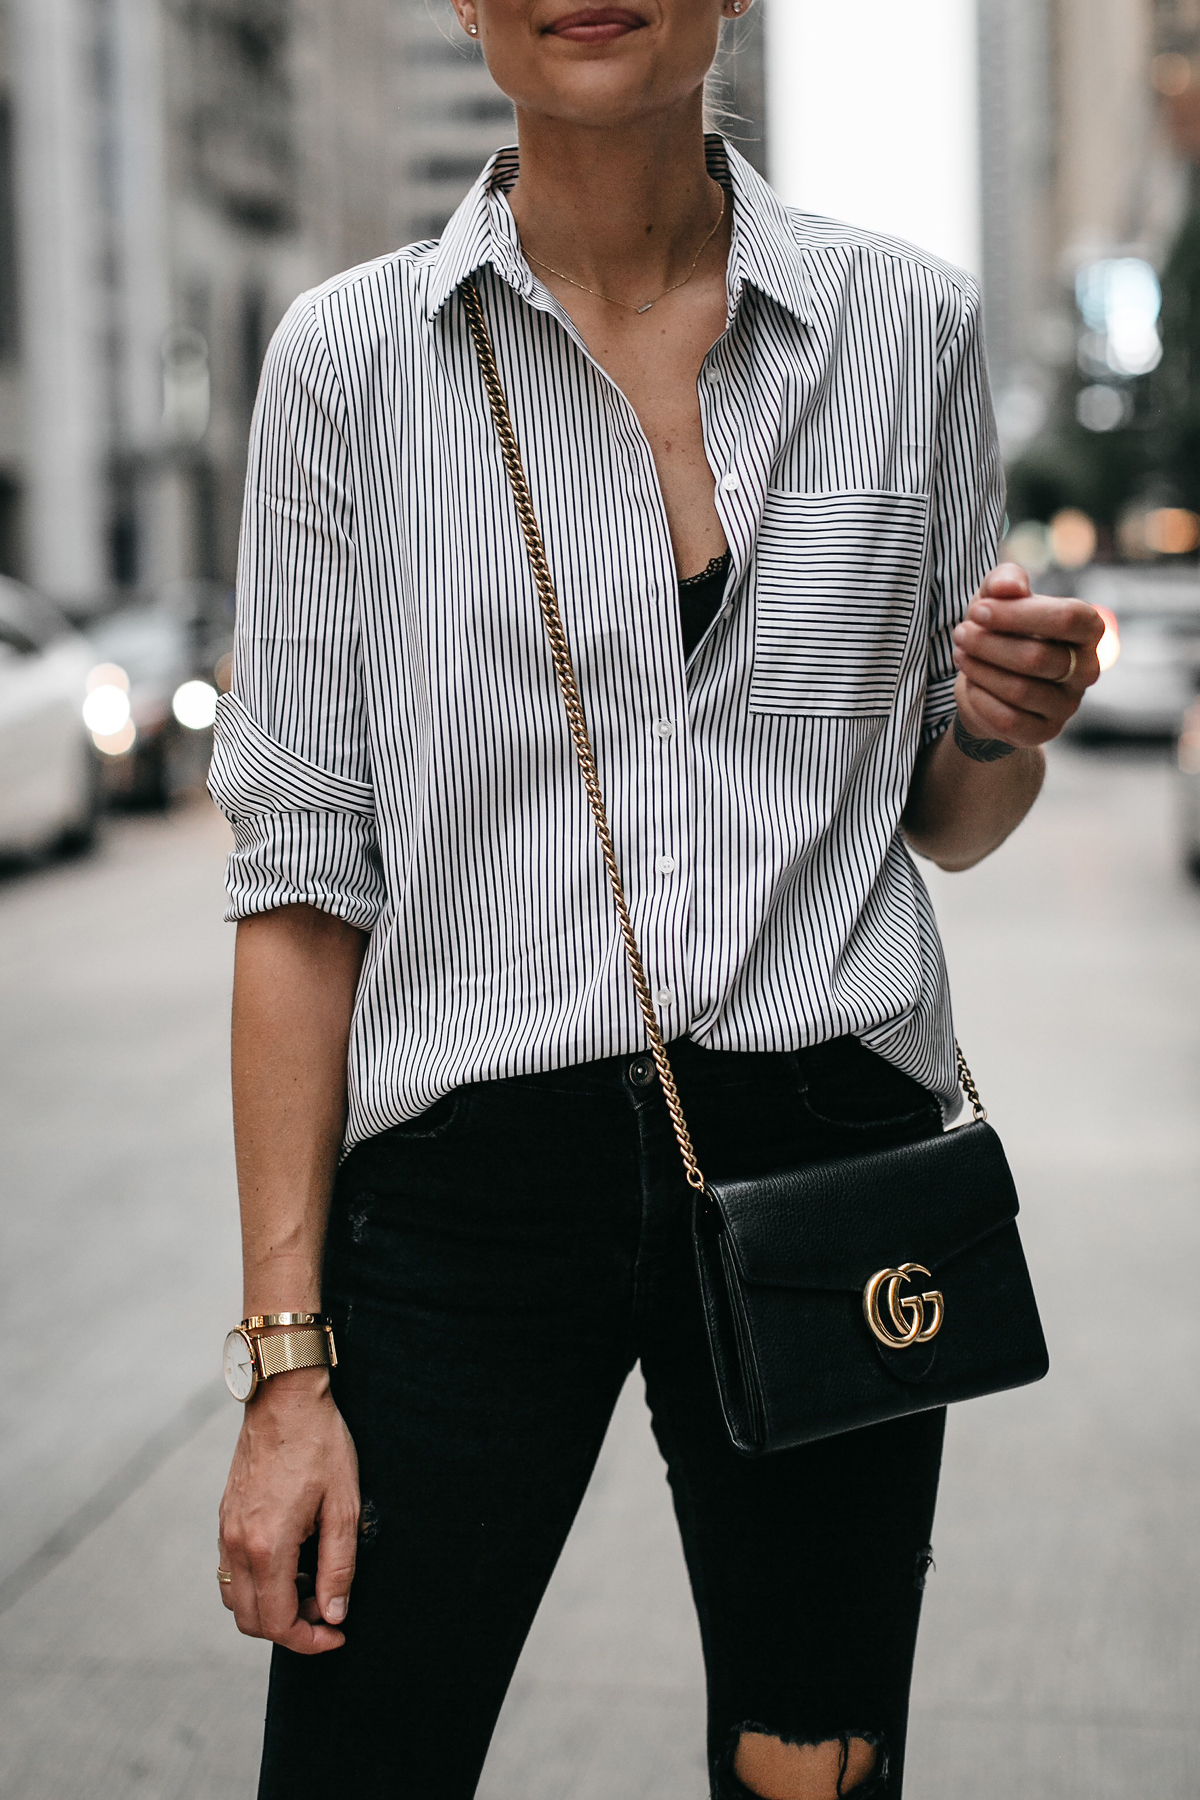 Black White Striped Button Down Shirt Gucci Handbag Fashion Jackson Dallas Blogger Fashion Blogger